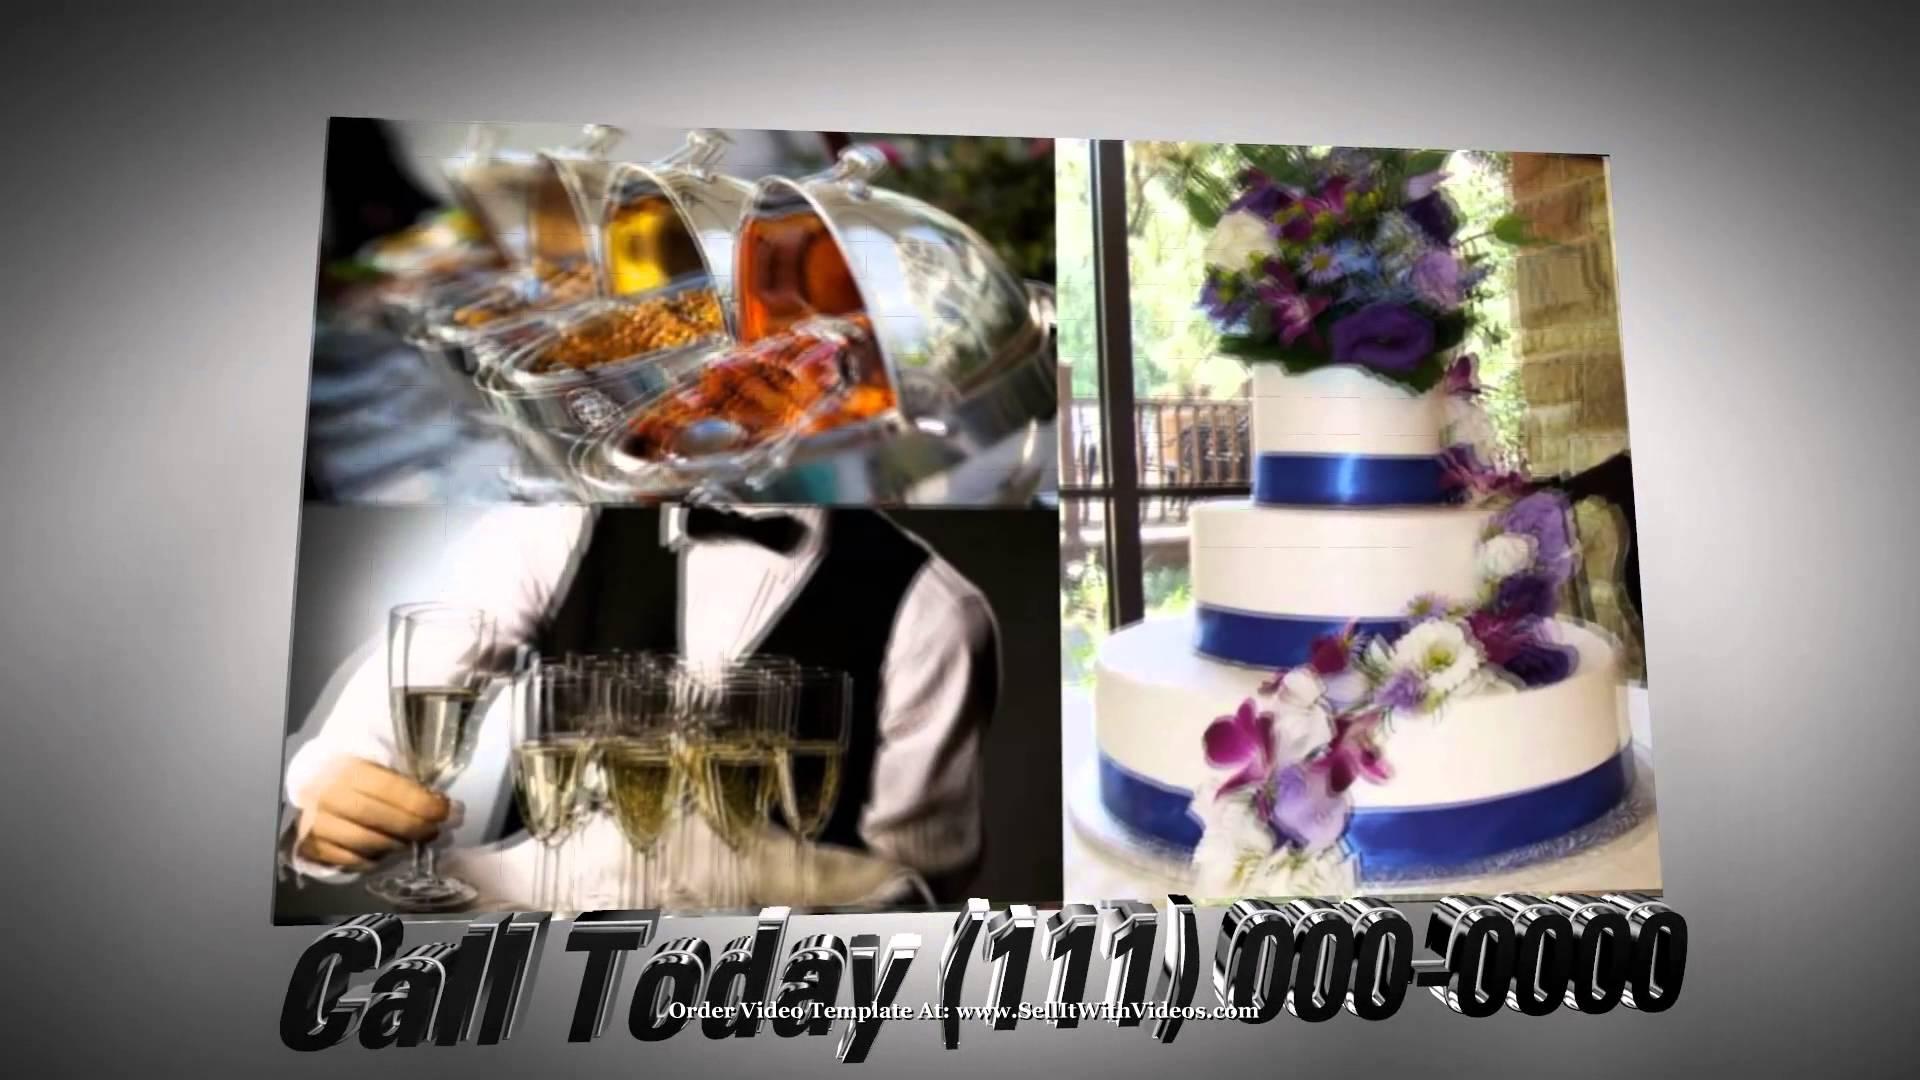 Video Marketing For Wedding Venues Catering Facilities Reception & Banquet Halls Video Templates